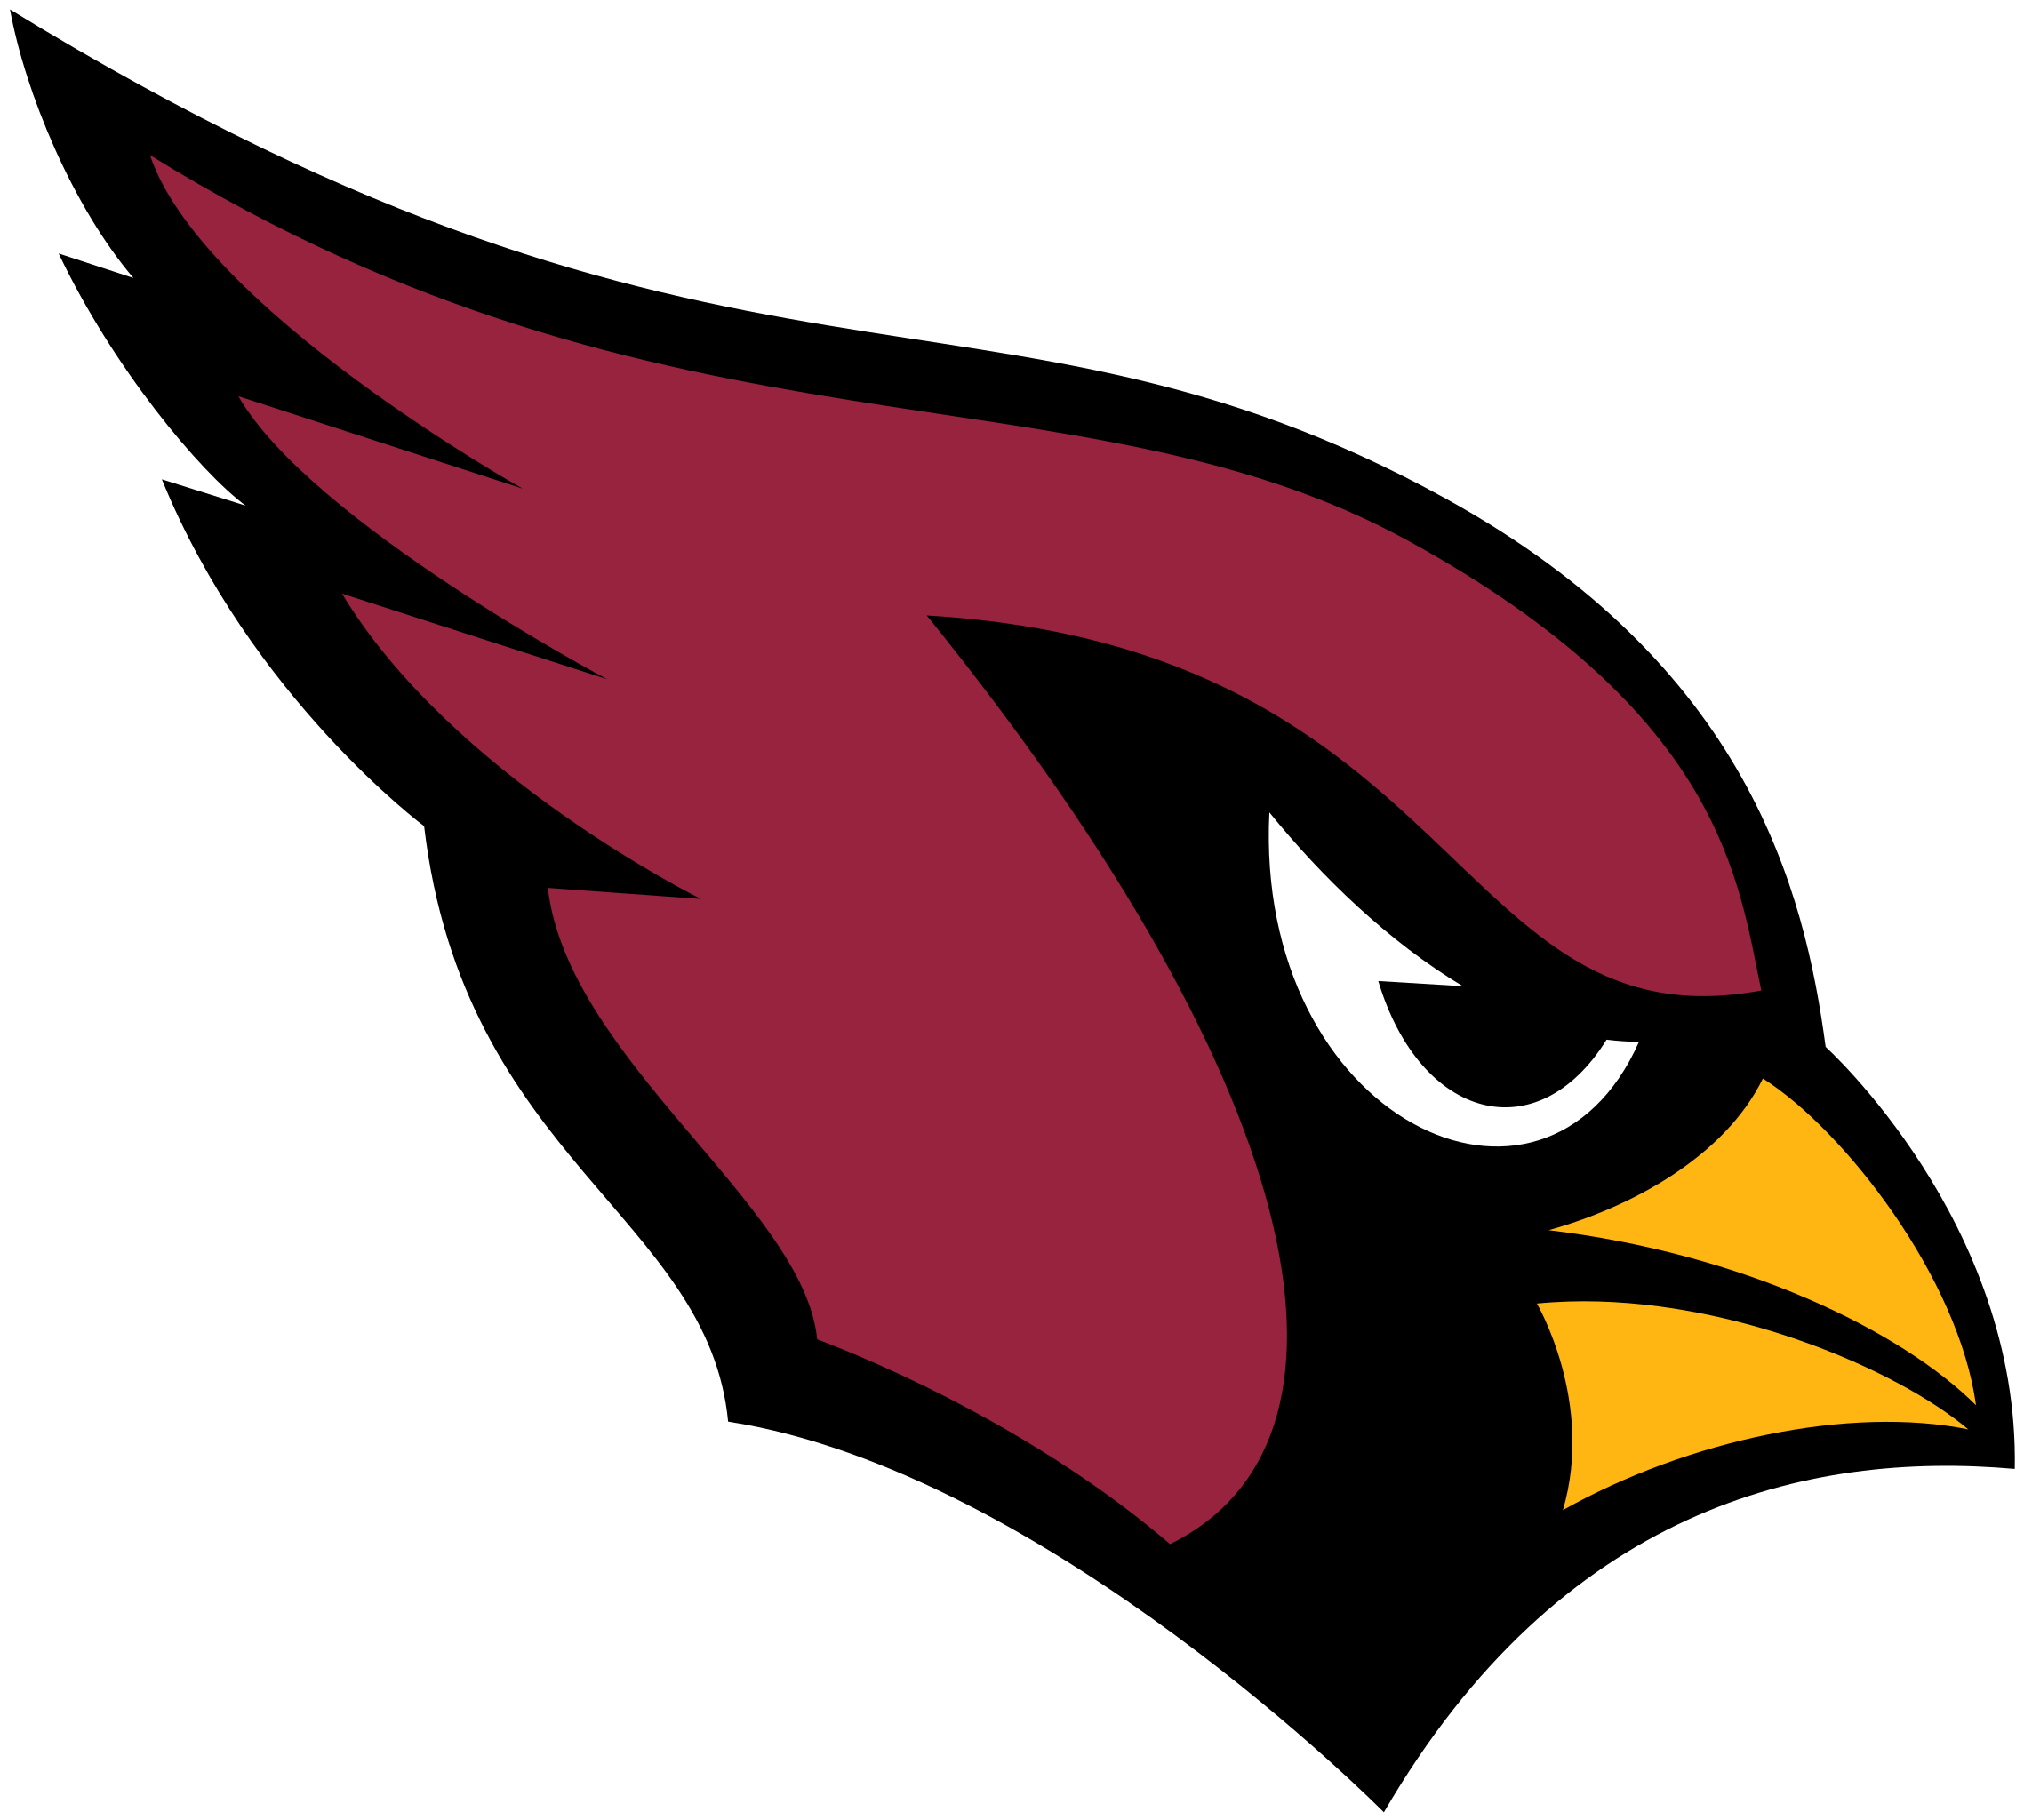 St. Louis Cardinals - Wikipedia